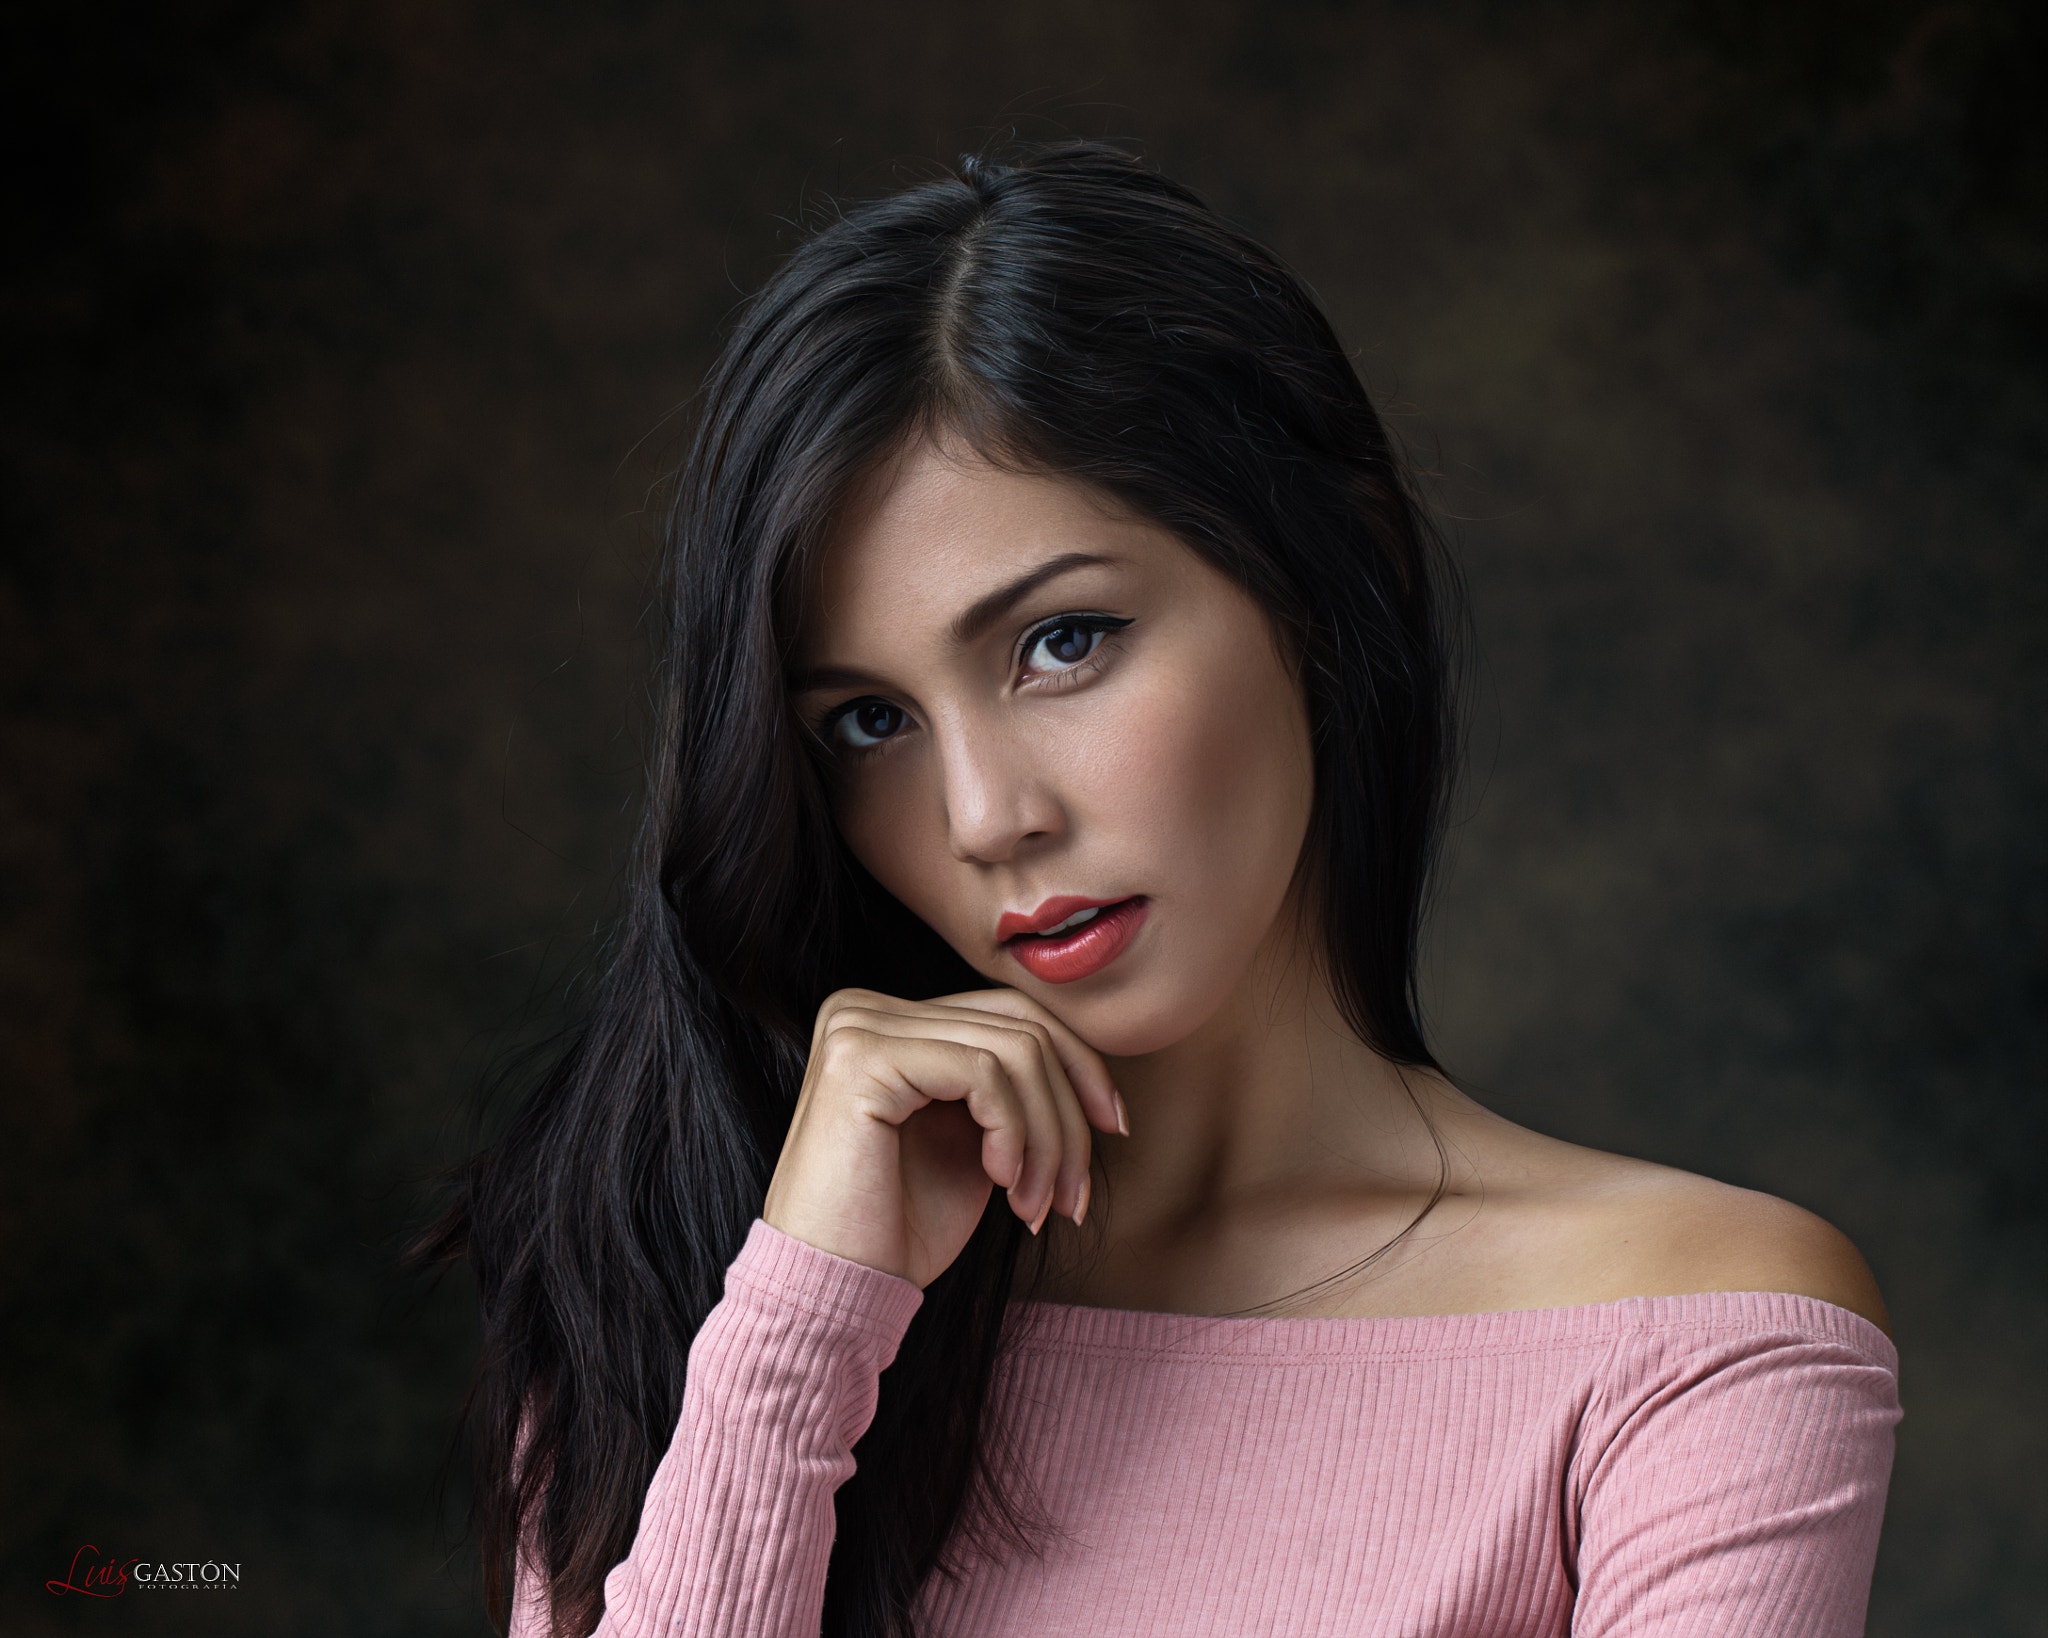 Women Simple Background Portrait Face Luis Gaston Pink Sweater Touching Face Black Hair Pink Nails D 2048x1638